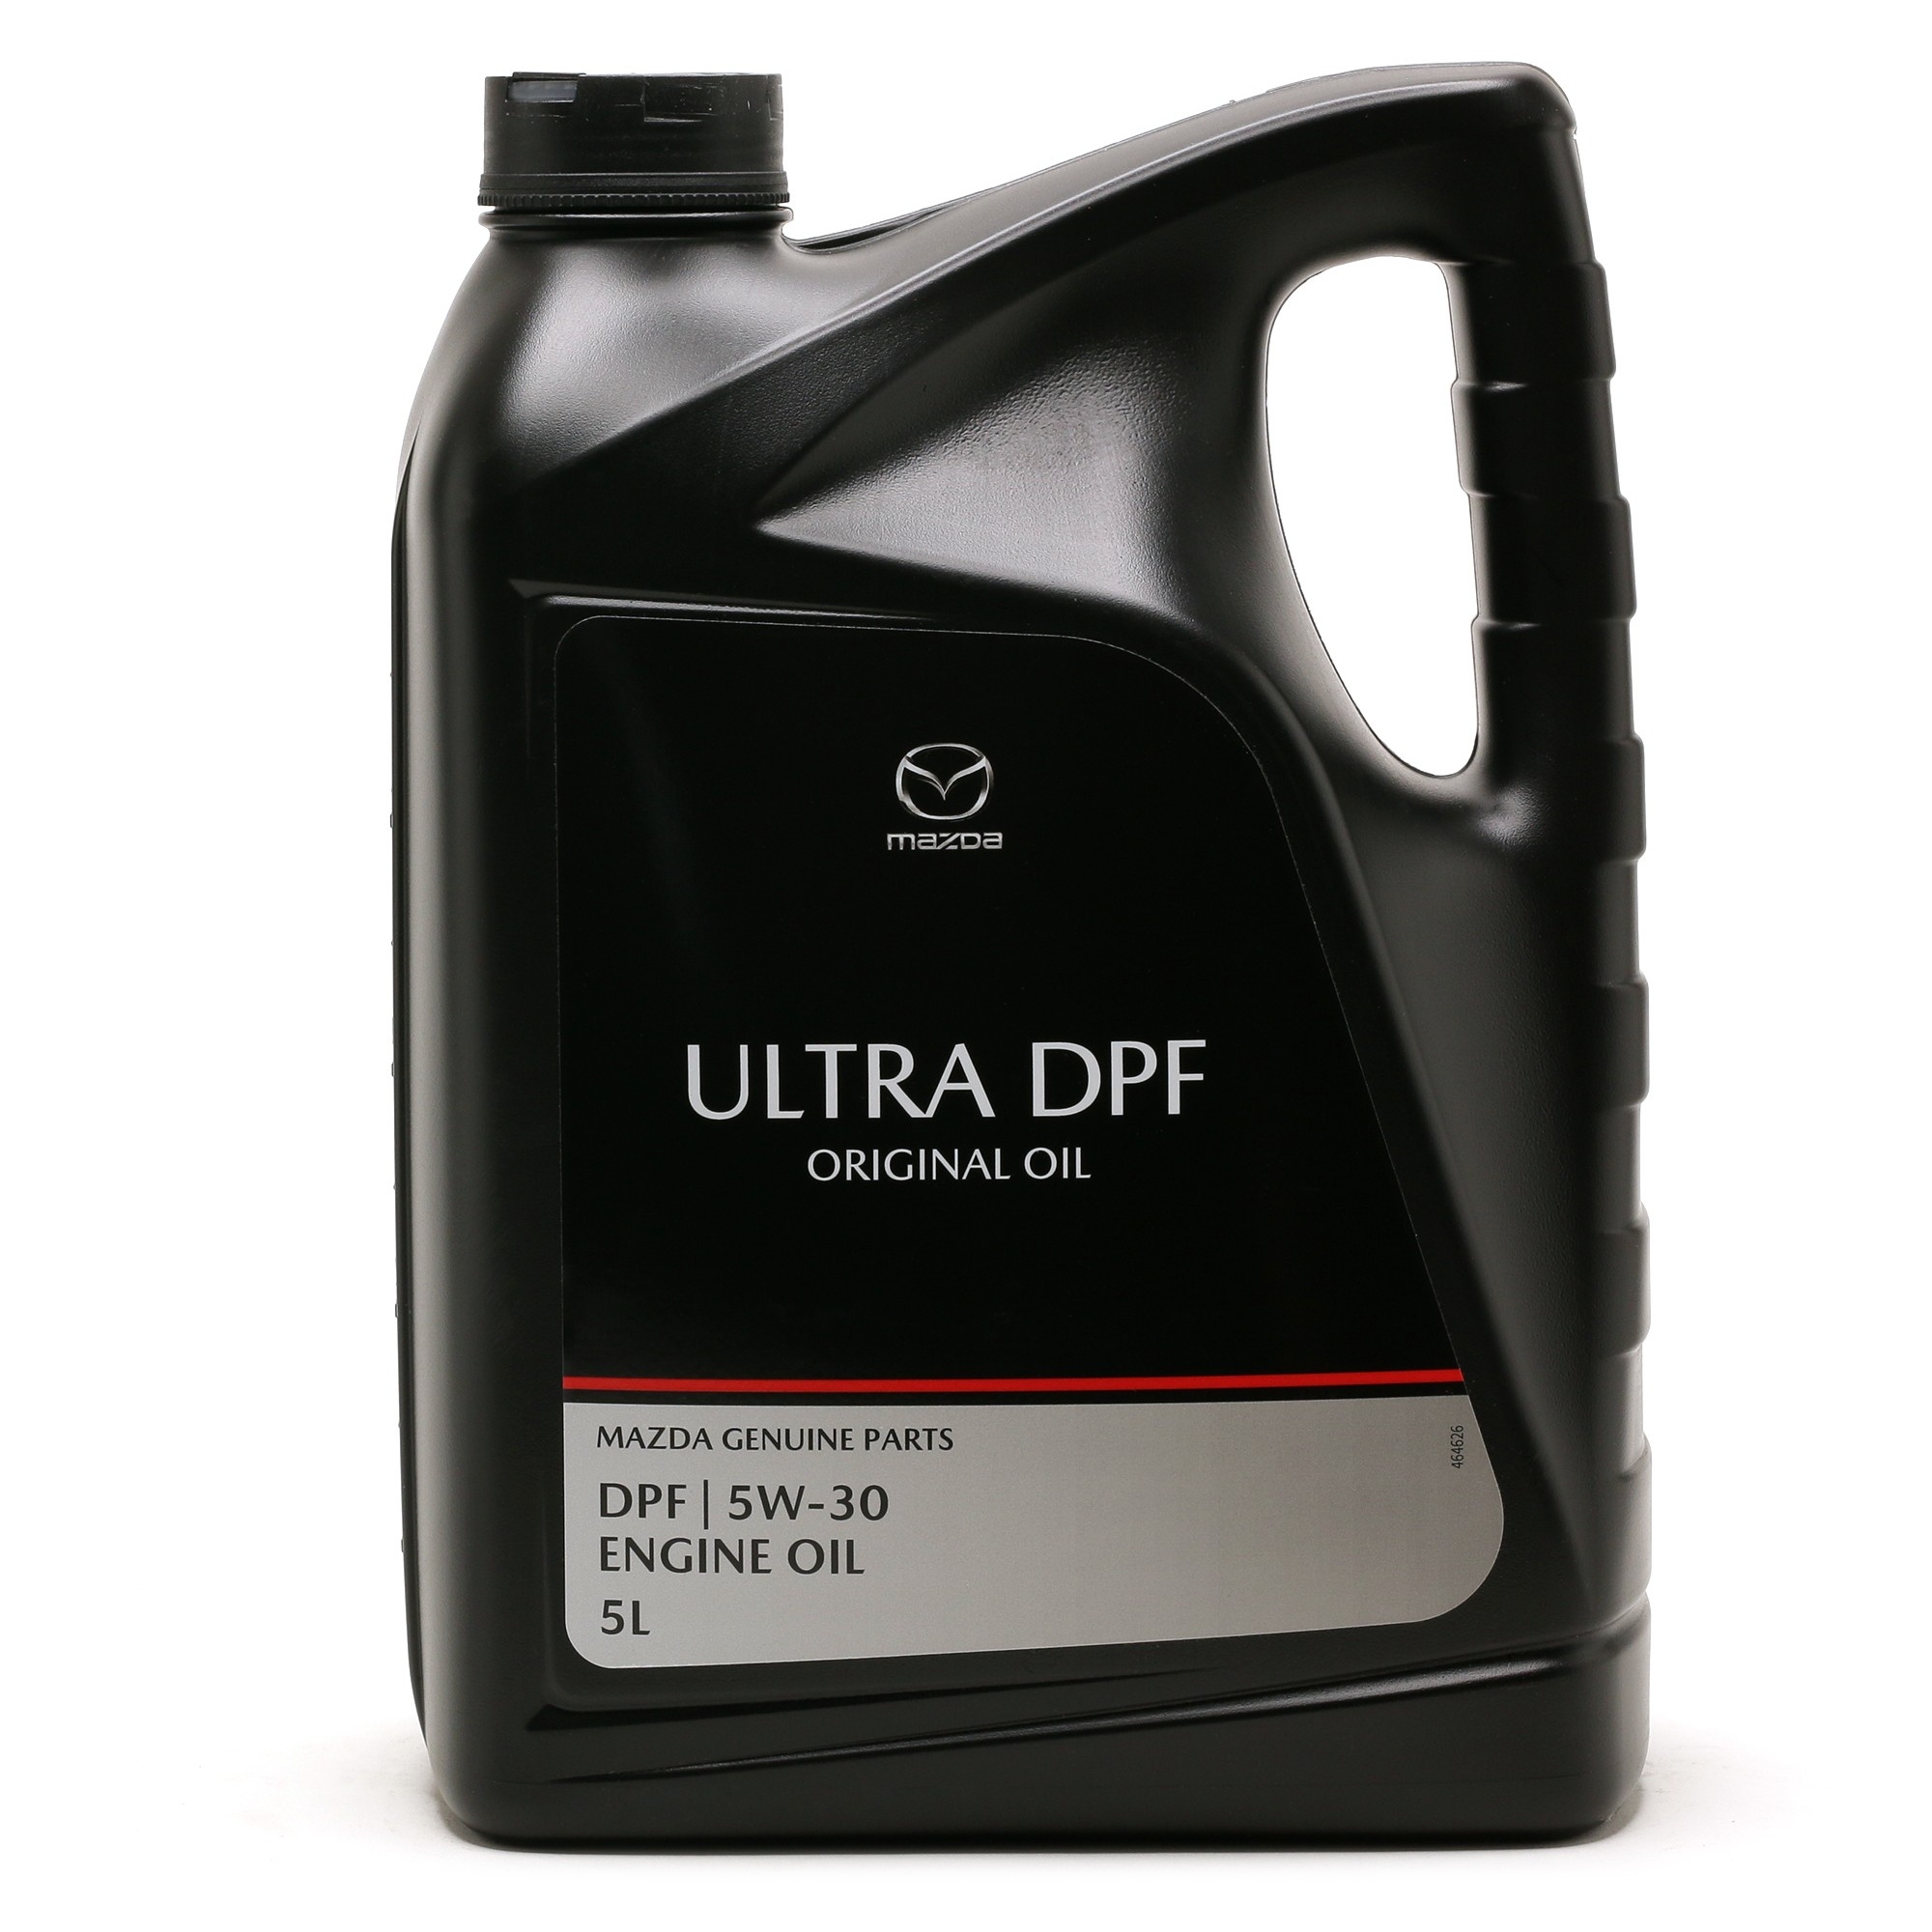 Bild von Original Öl Ultra DPF 5W-30 5l